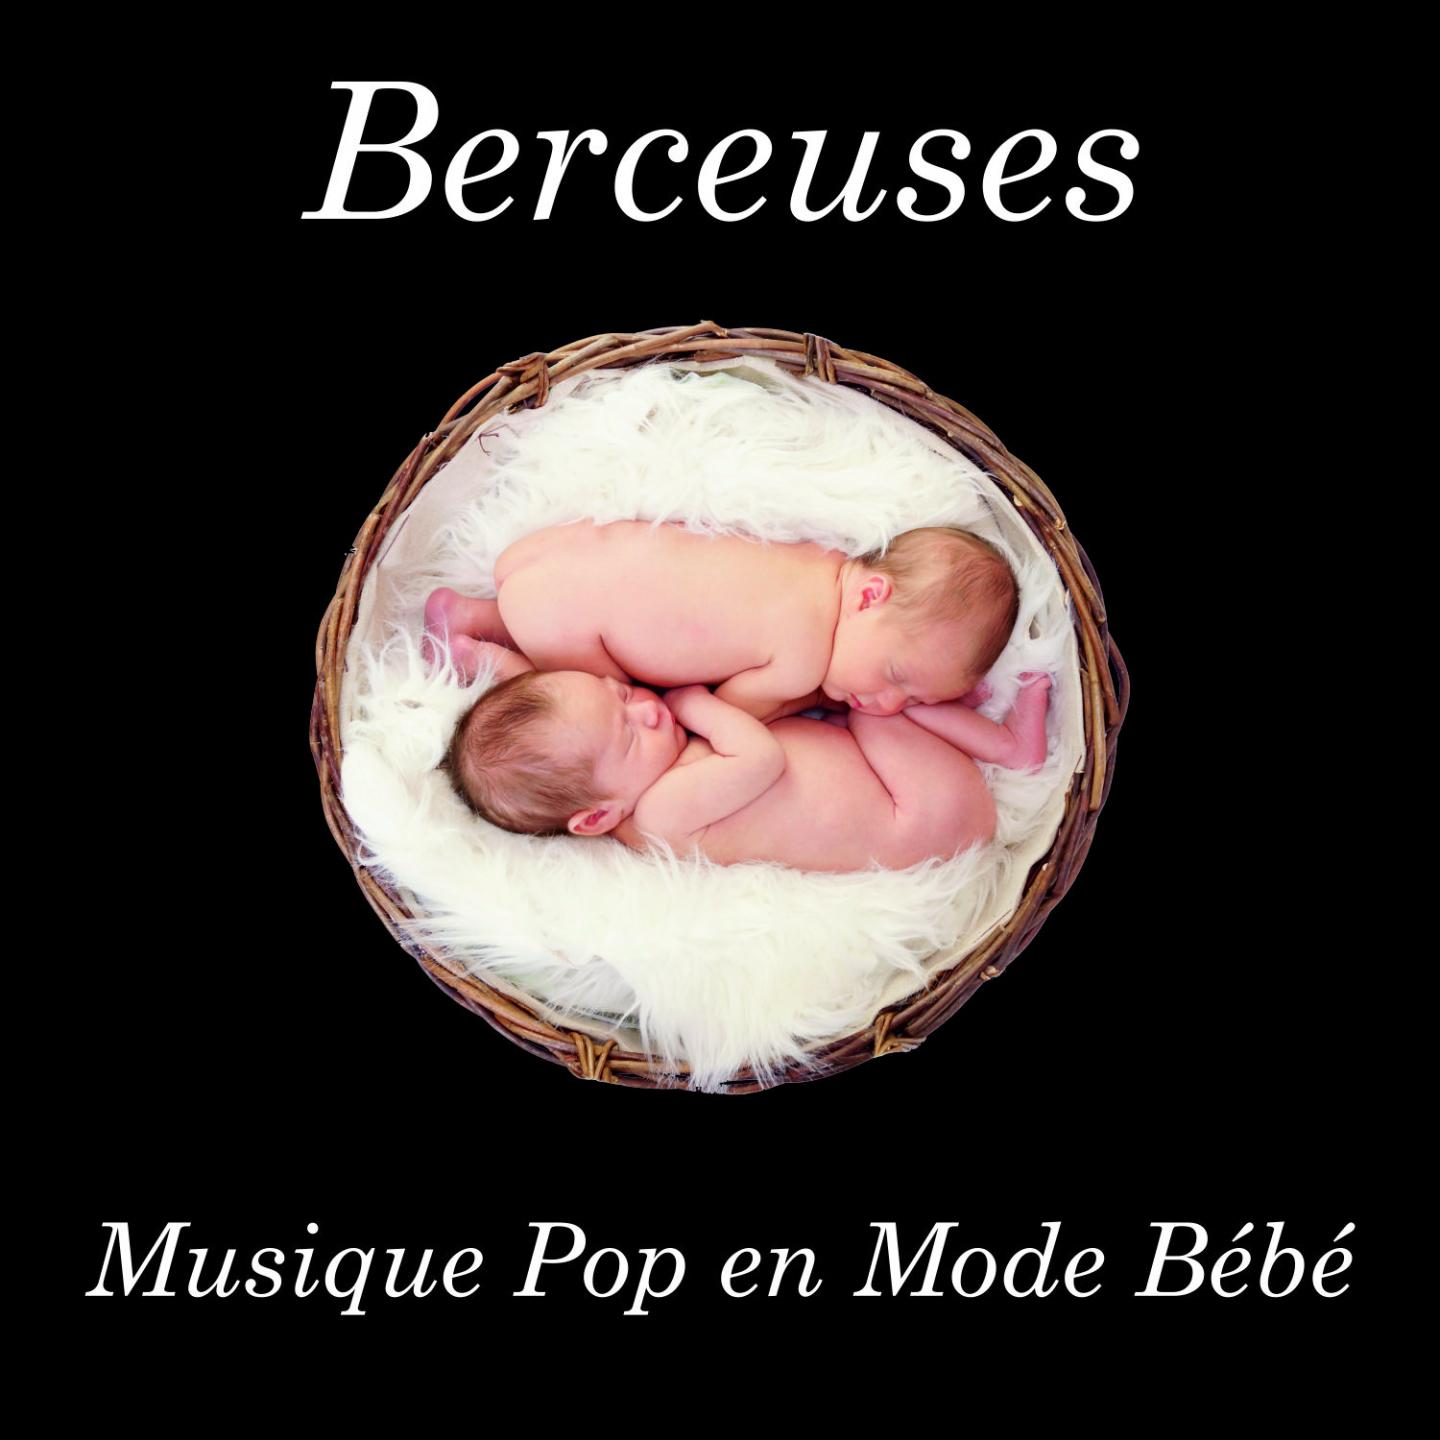 Berceuses: Musique Pop en Mode Be be